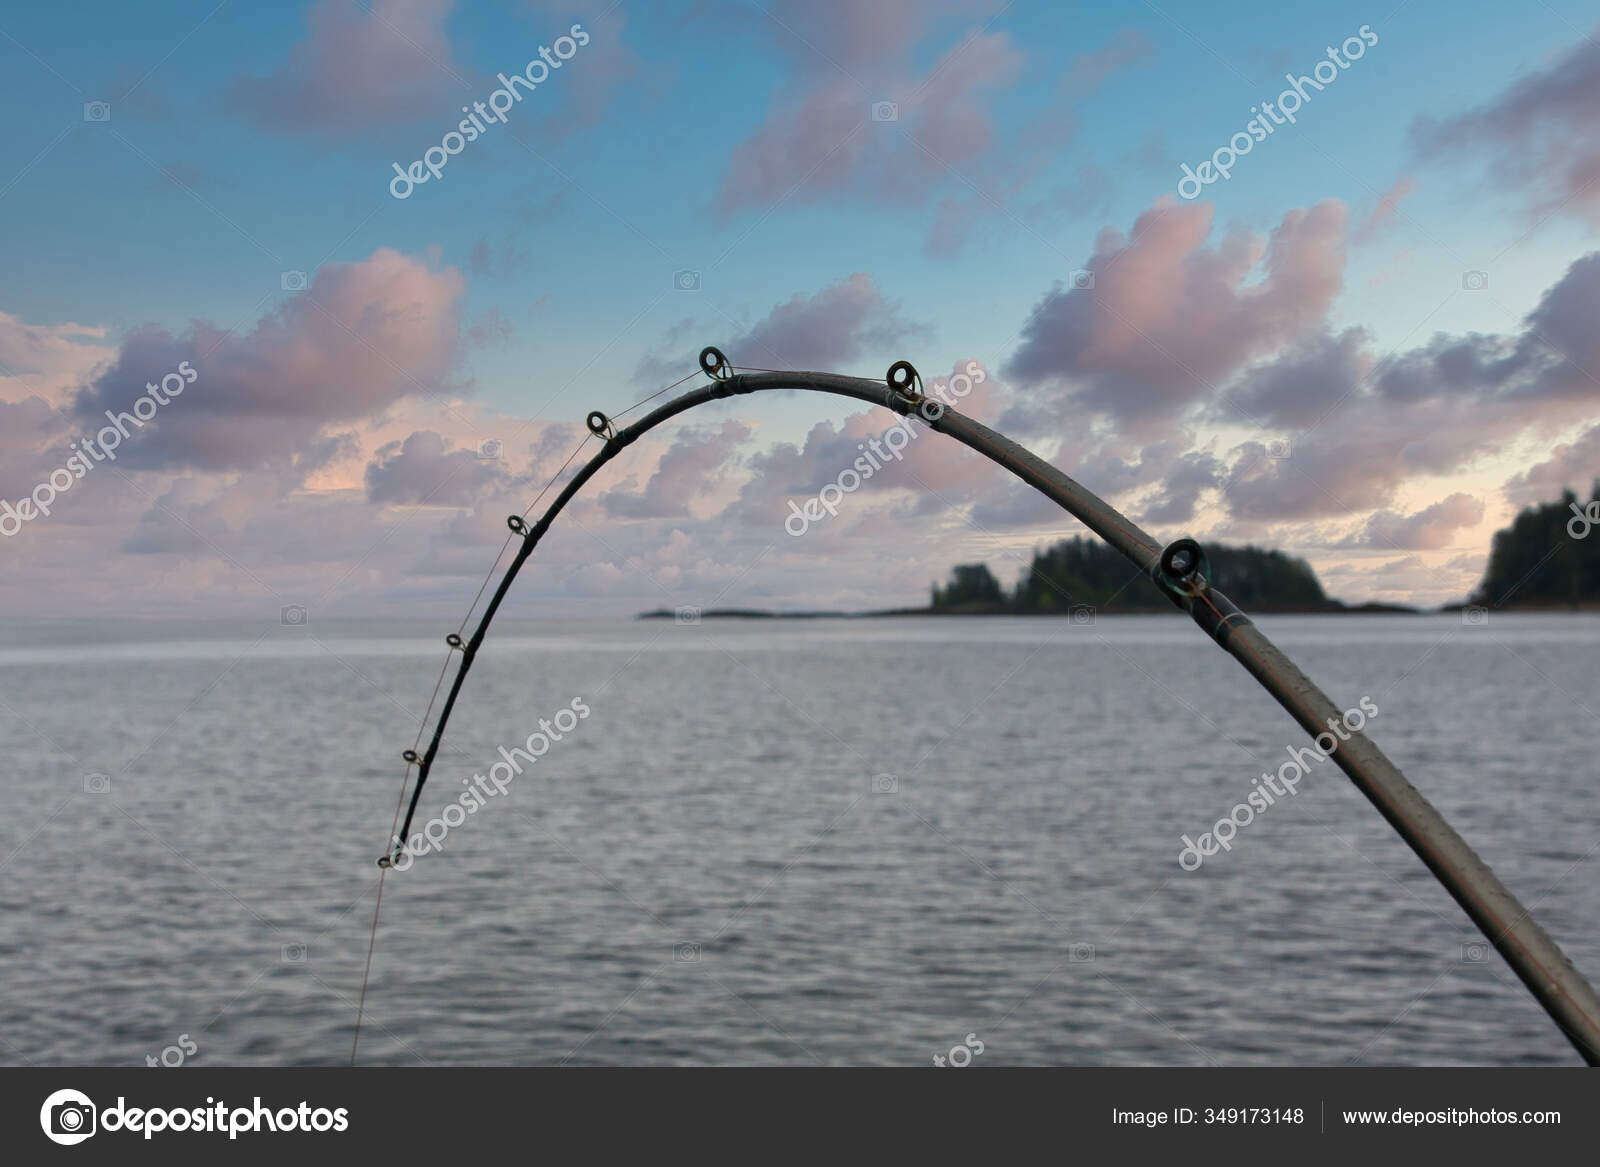 Bent Fishing Pole at Dusk — Stock Photo © dbvirago #349173148